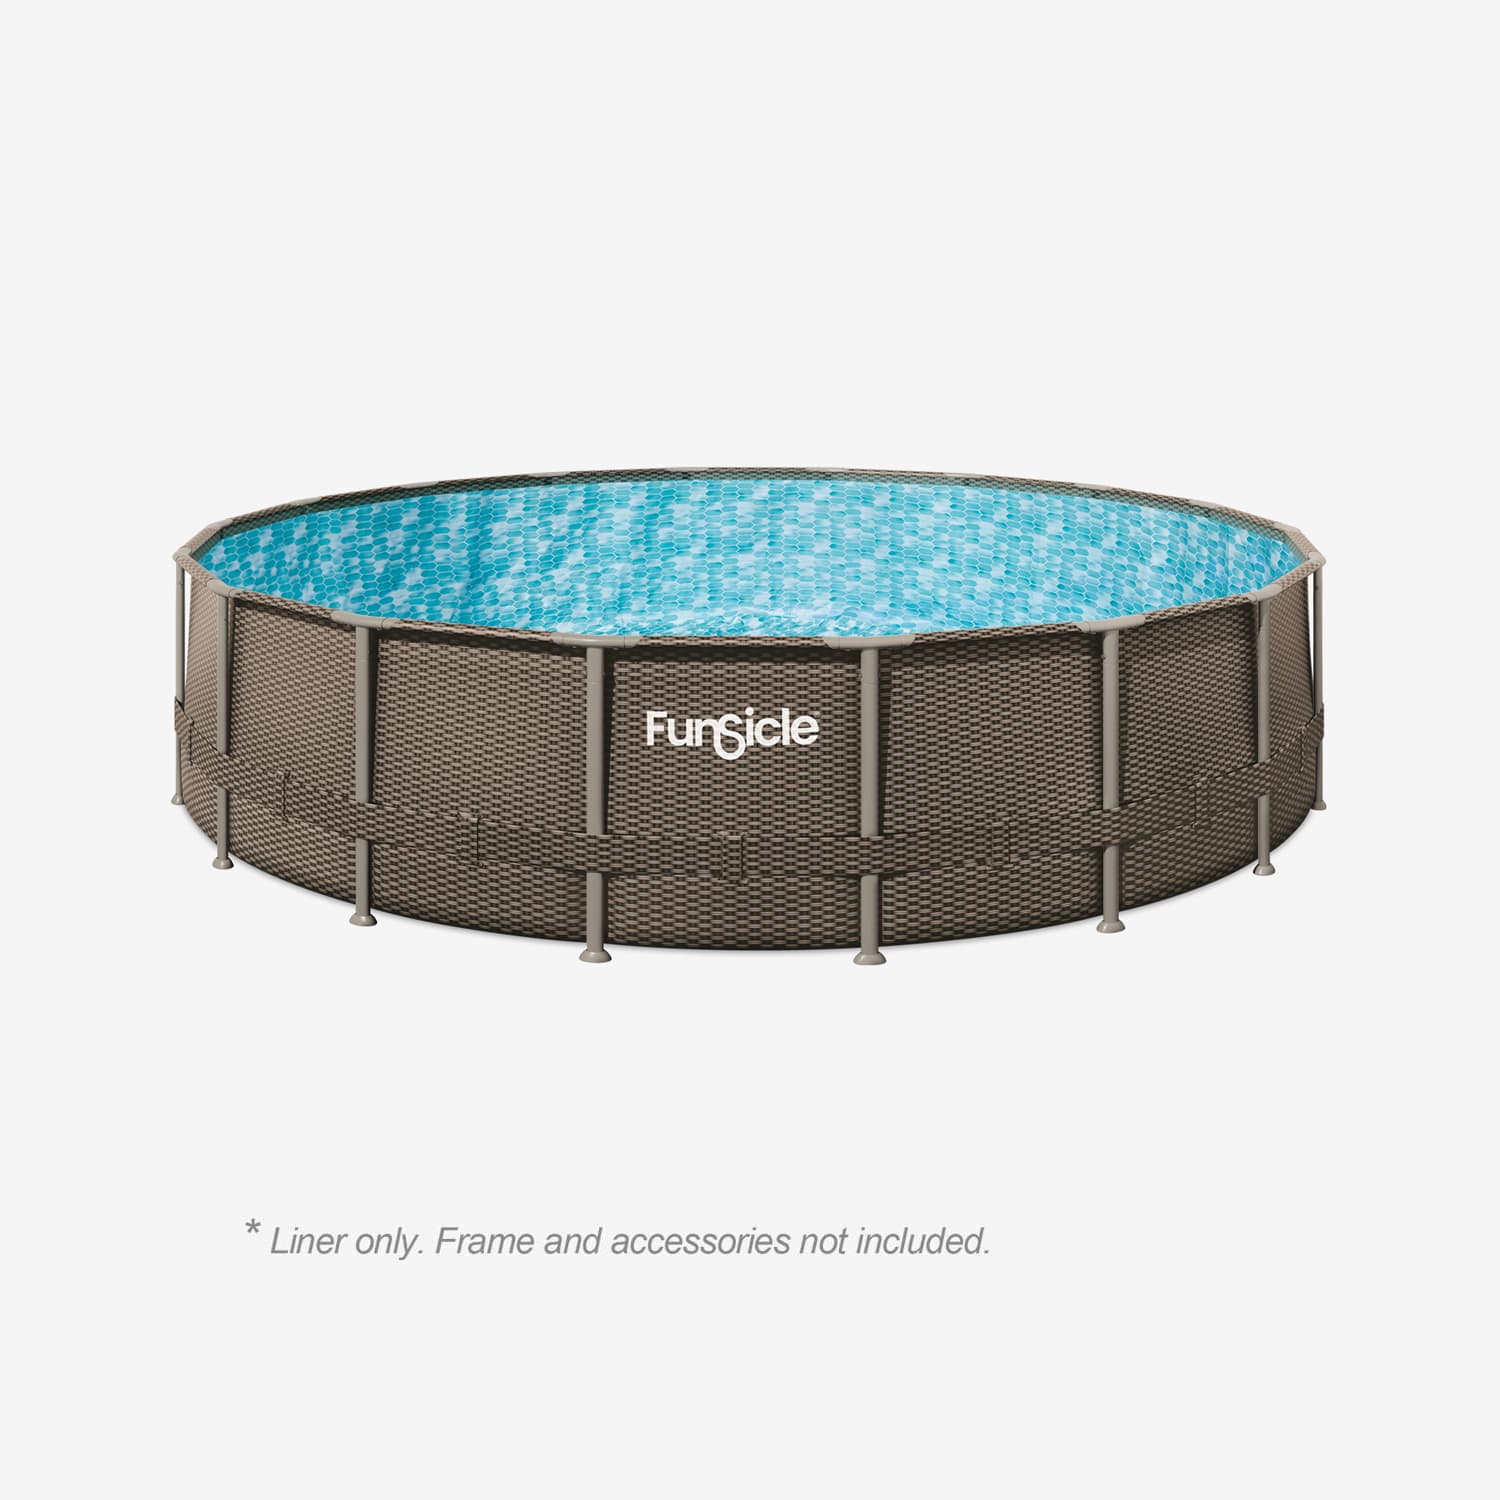 Funsicle 22 ft Oasis Designer Pool Liner – Dark Double Rattan